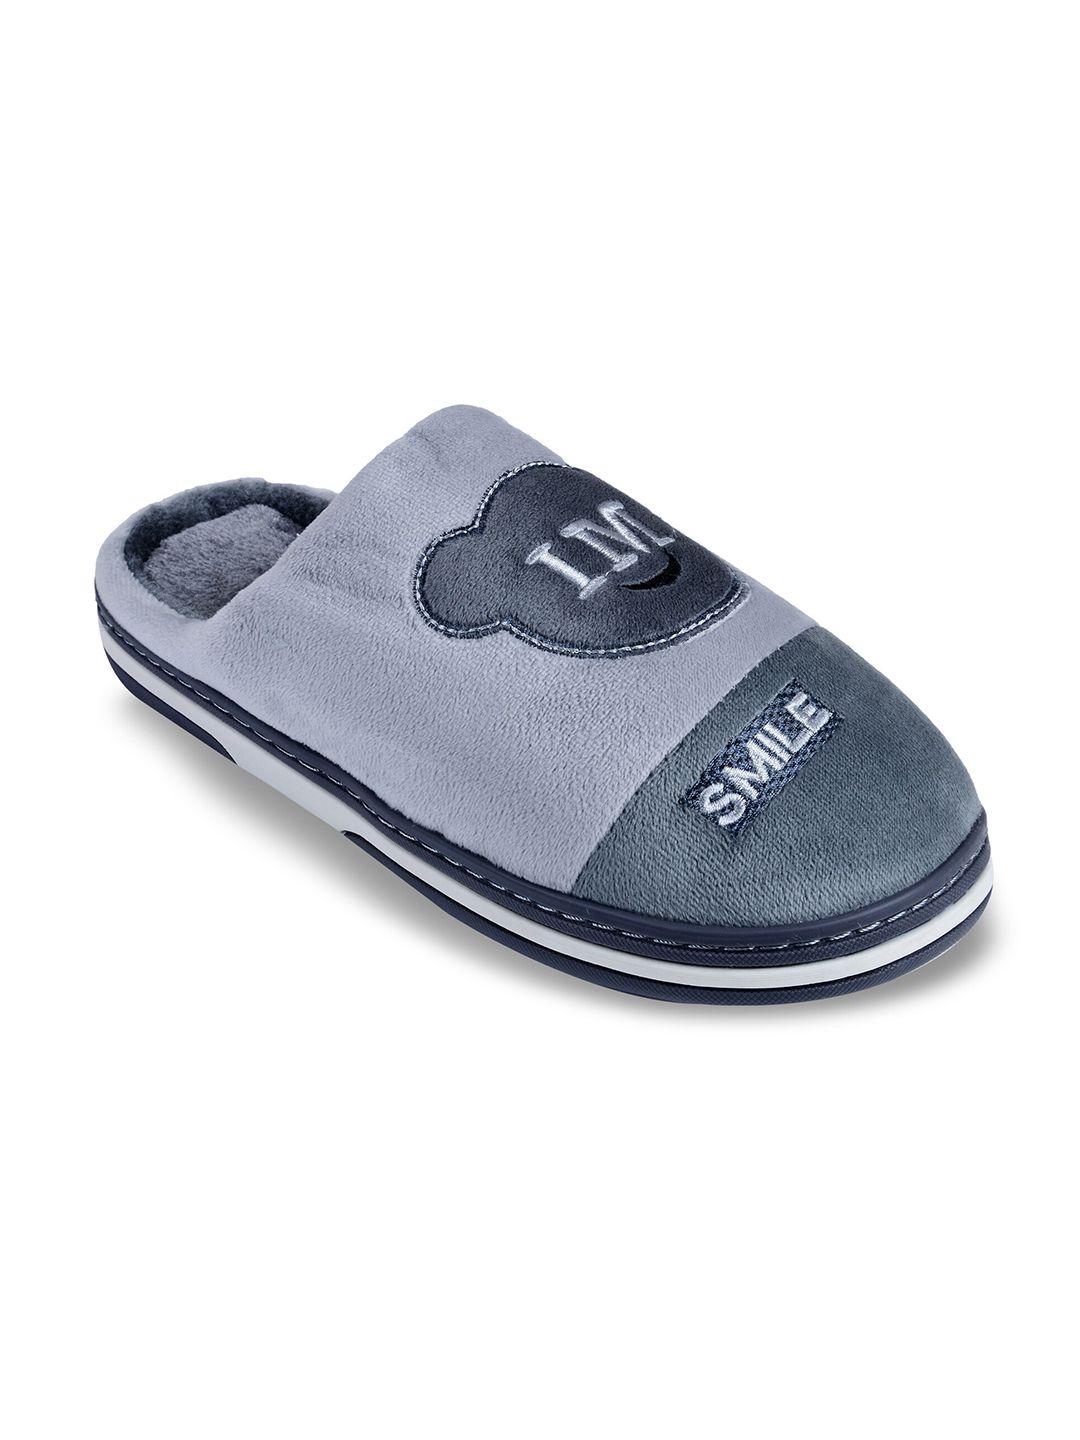 cassiey men grey & black printed room slippers